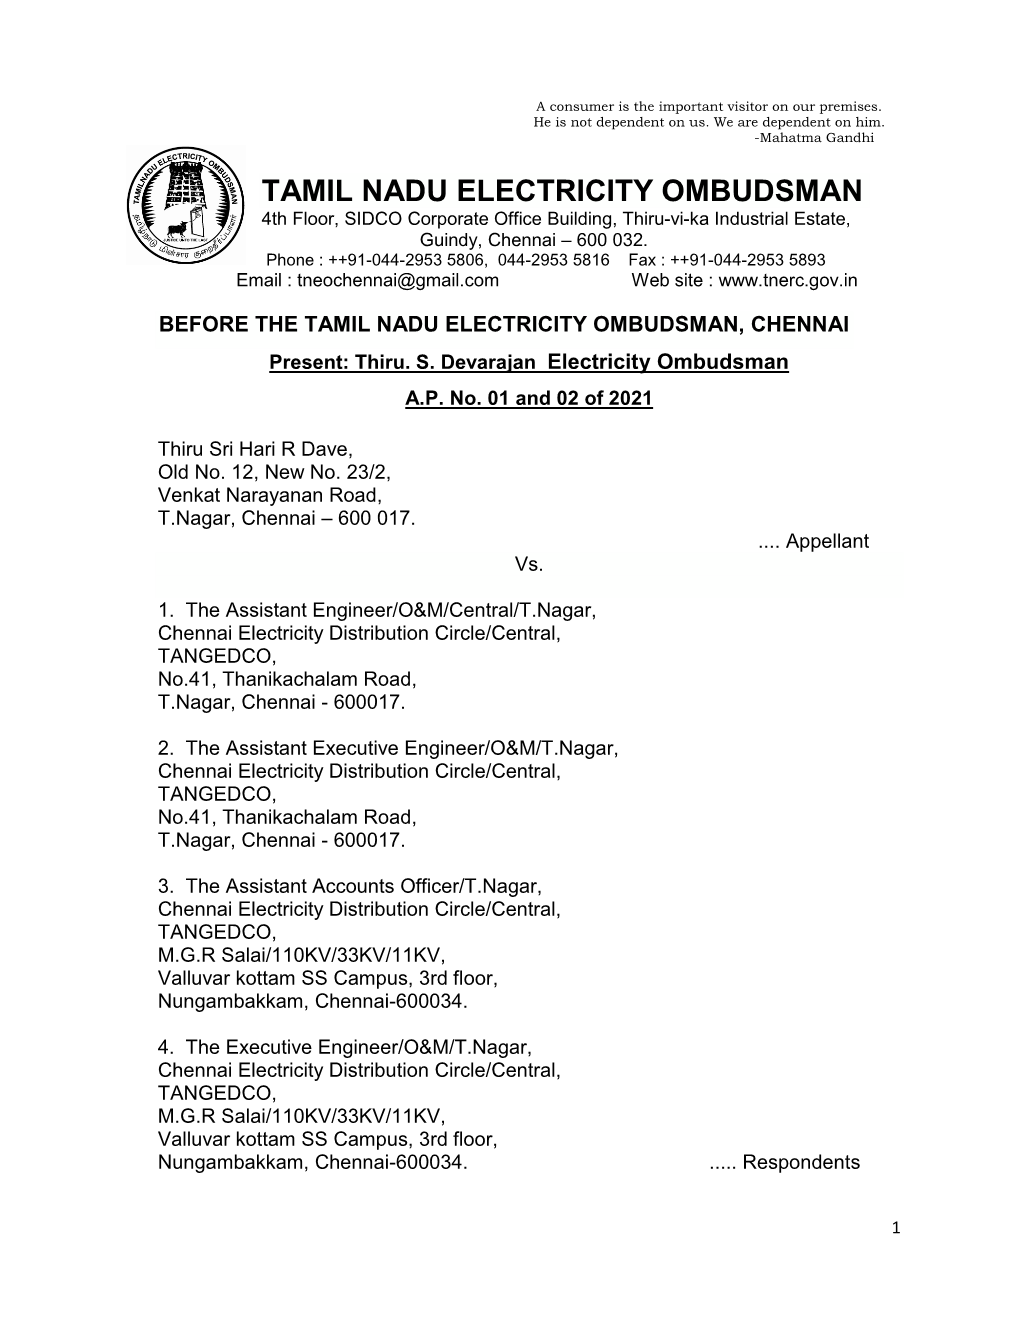 TAMIL NADU ELECTRICITY OMBUDSMAN 4Th Floor, SIDCO Corporate Office Building, Thiru-Vi-Ka Industrial Estate, Guindy, Chennai – 600 032